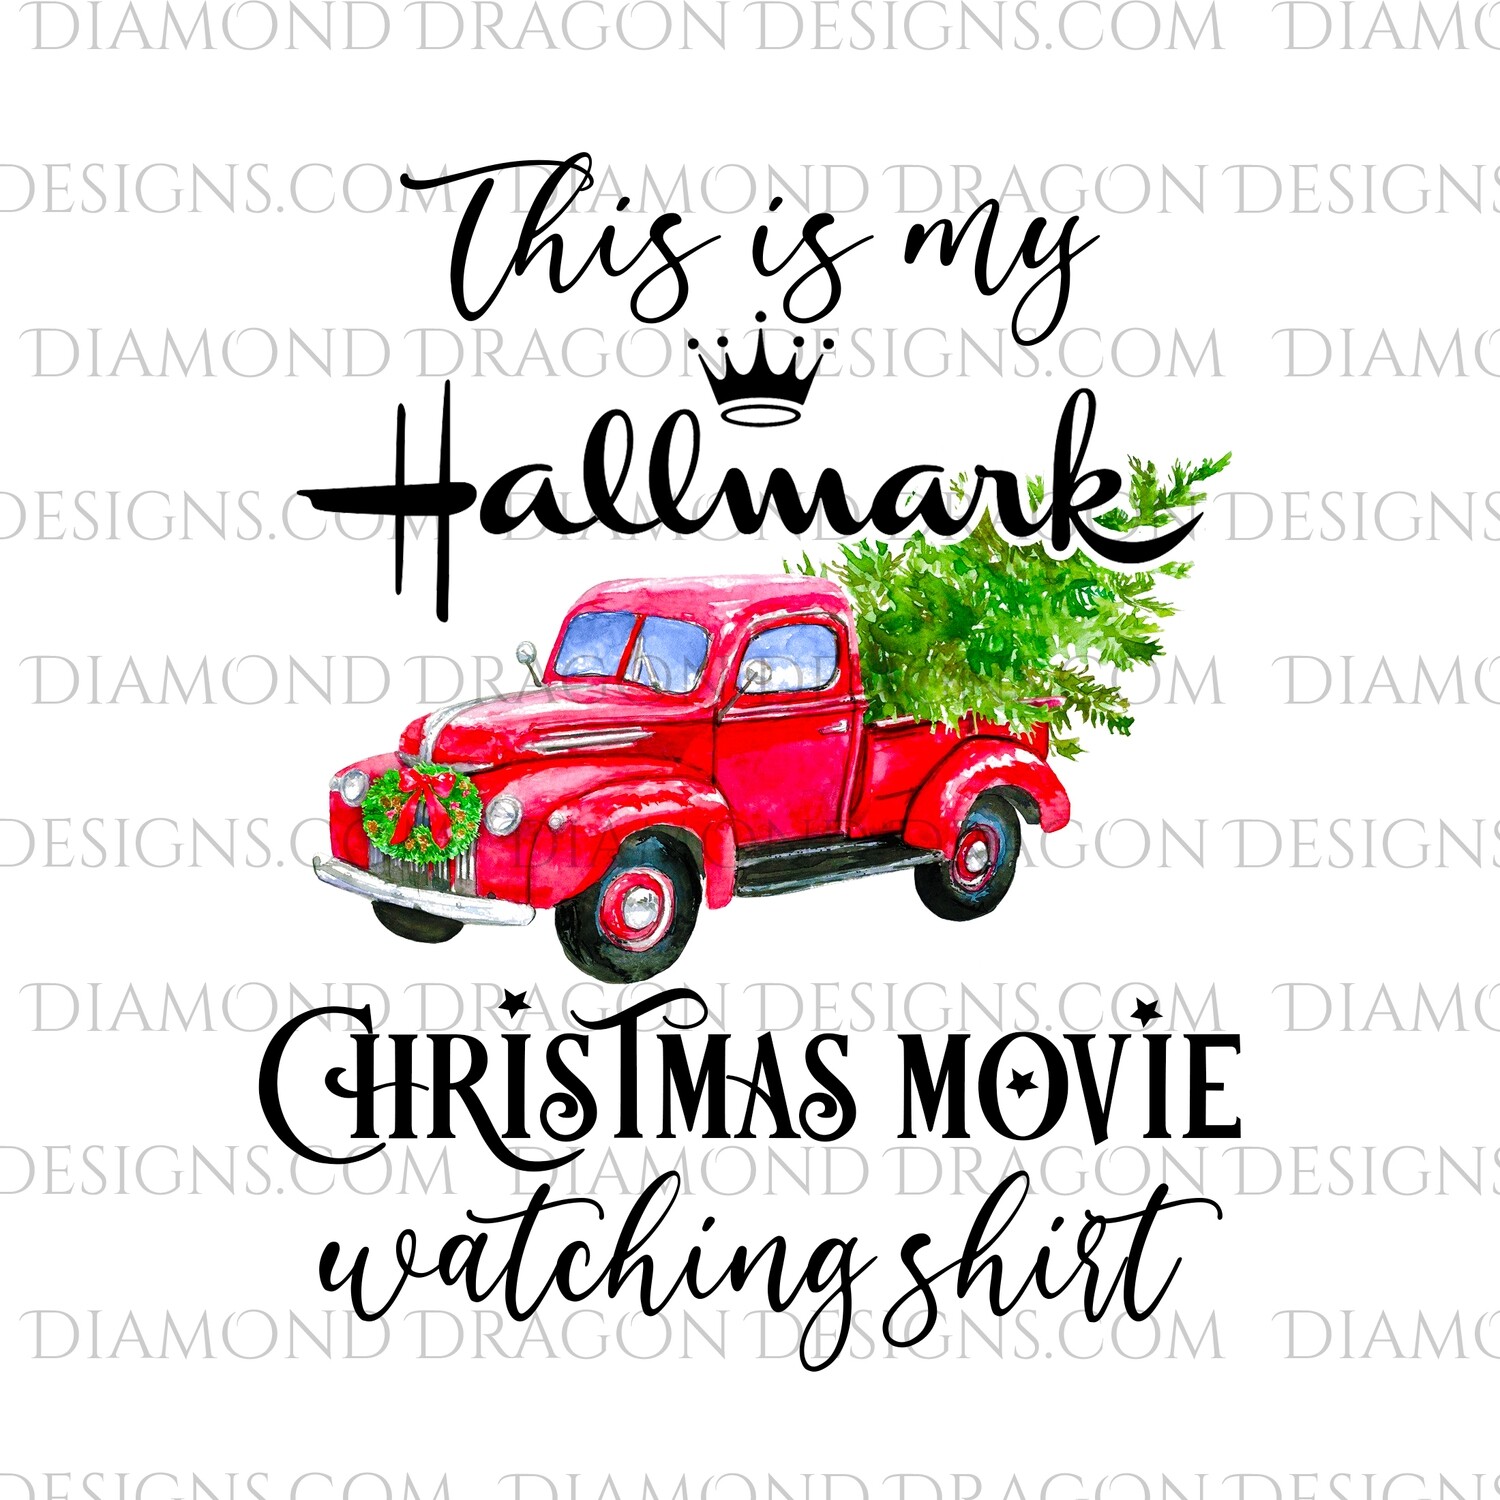 Christmas - Red Truck, Christmas Tree, Hallmark Christmas Movie Watching Shirt, Red Vintage Truck, Digital Image